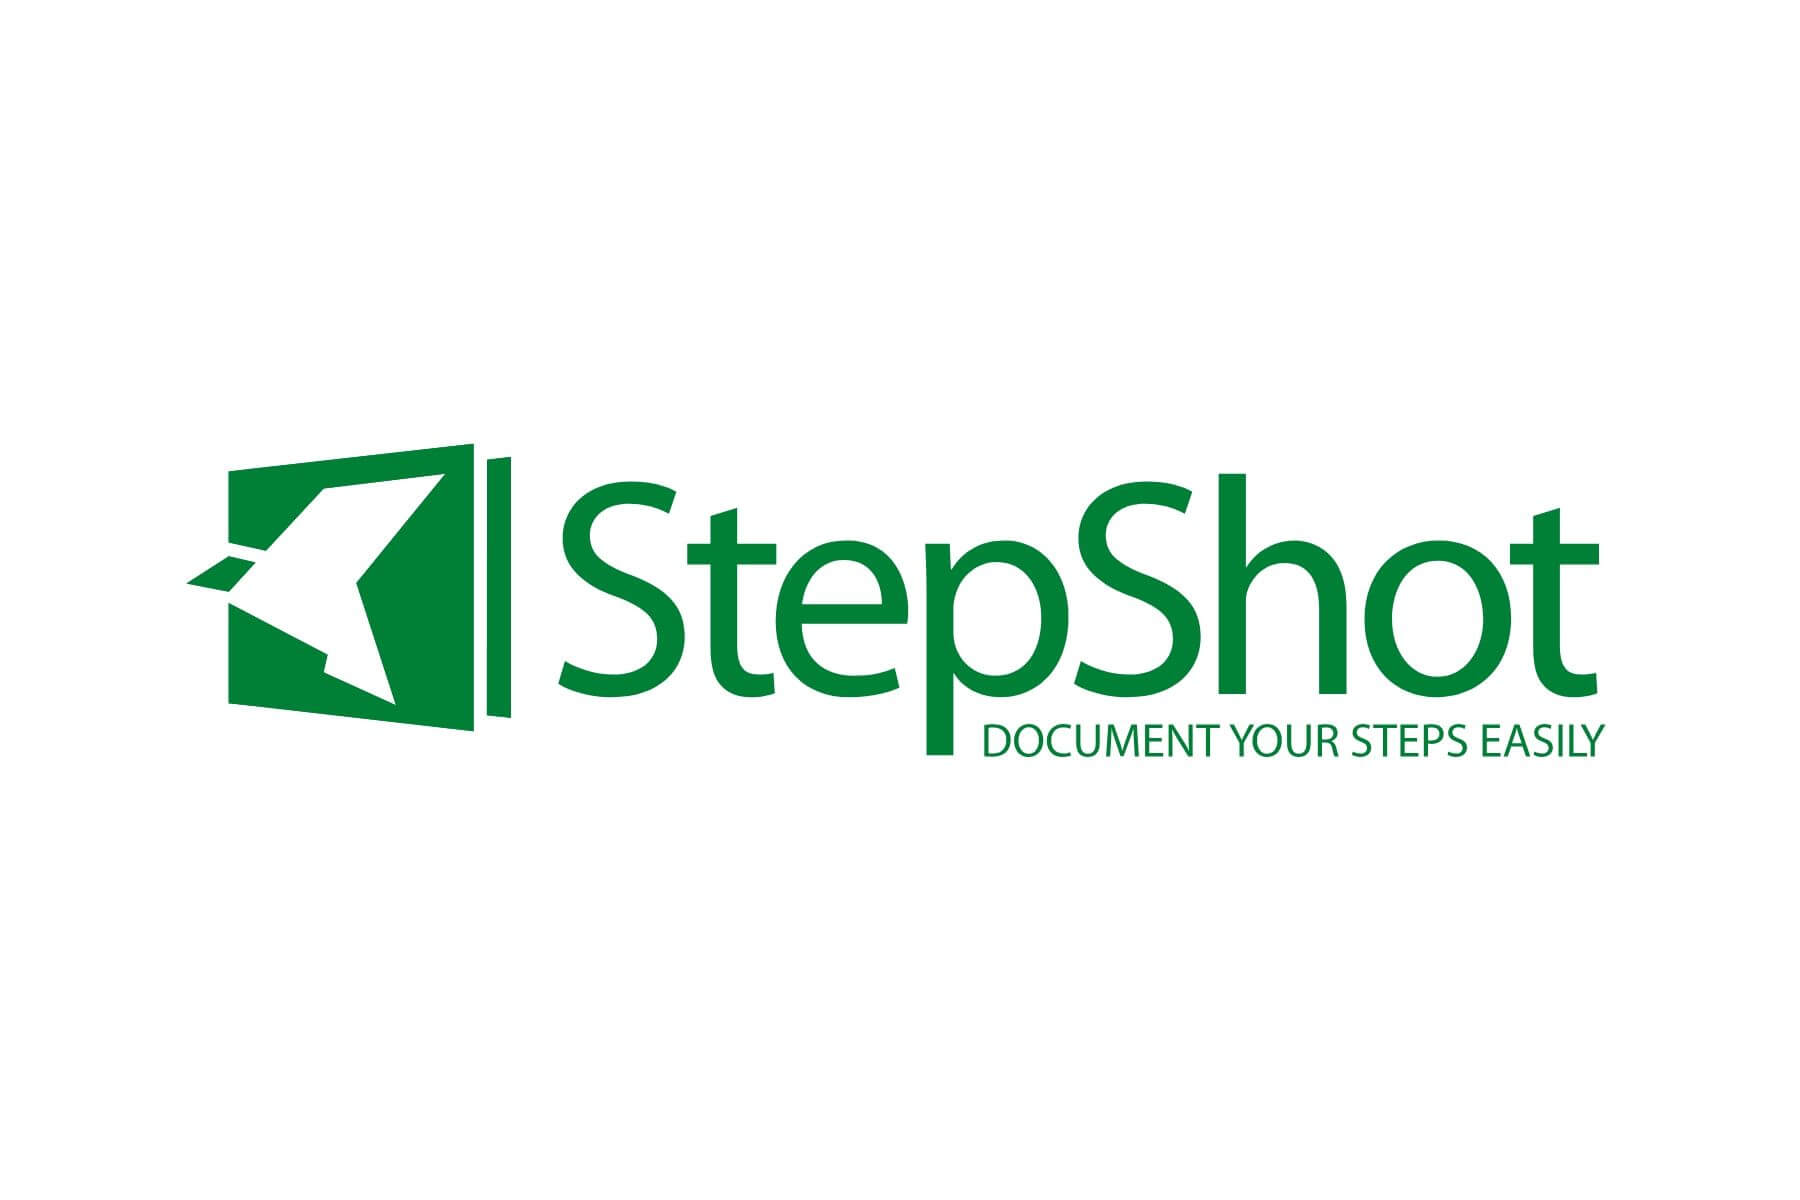 StepShot documentation software